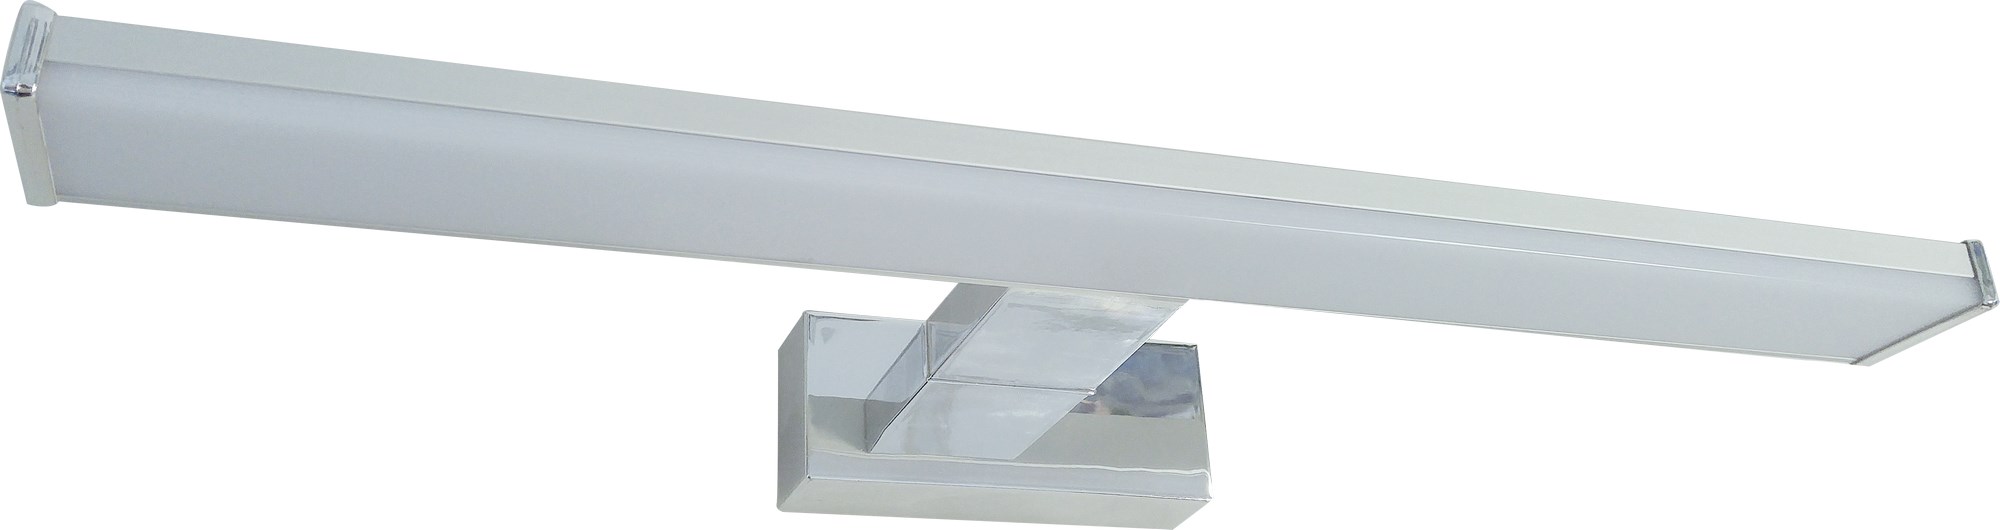 LED svítidlo koupelnové MIRROR 12W NW, 4000K, 1000lm, IP44, 60 cm, Greenlux GXLS204 - zvìtšit obrázek